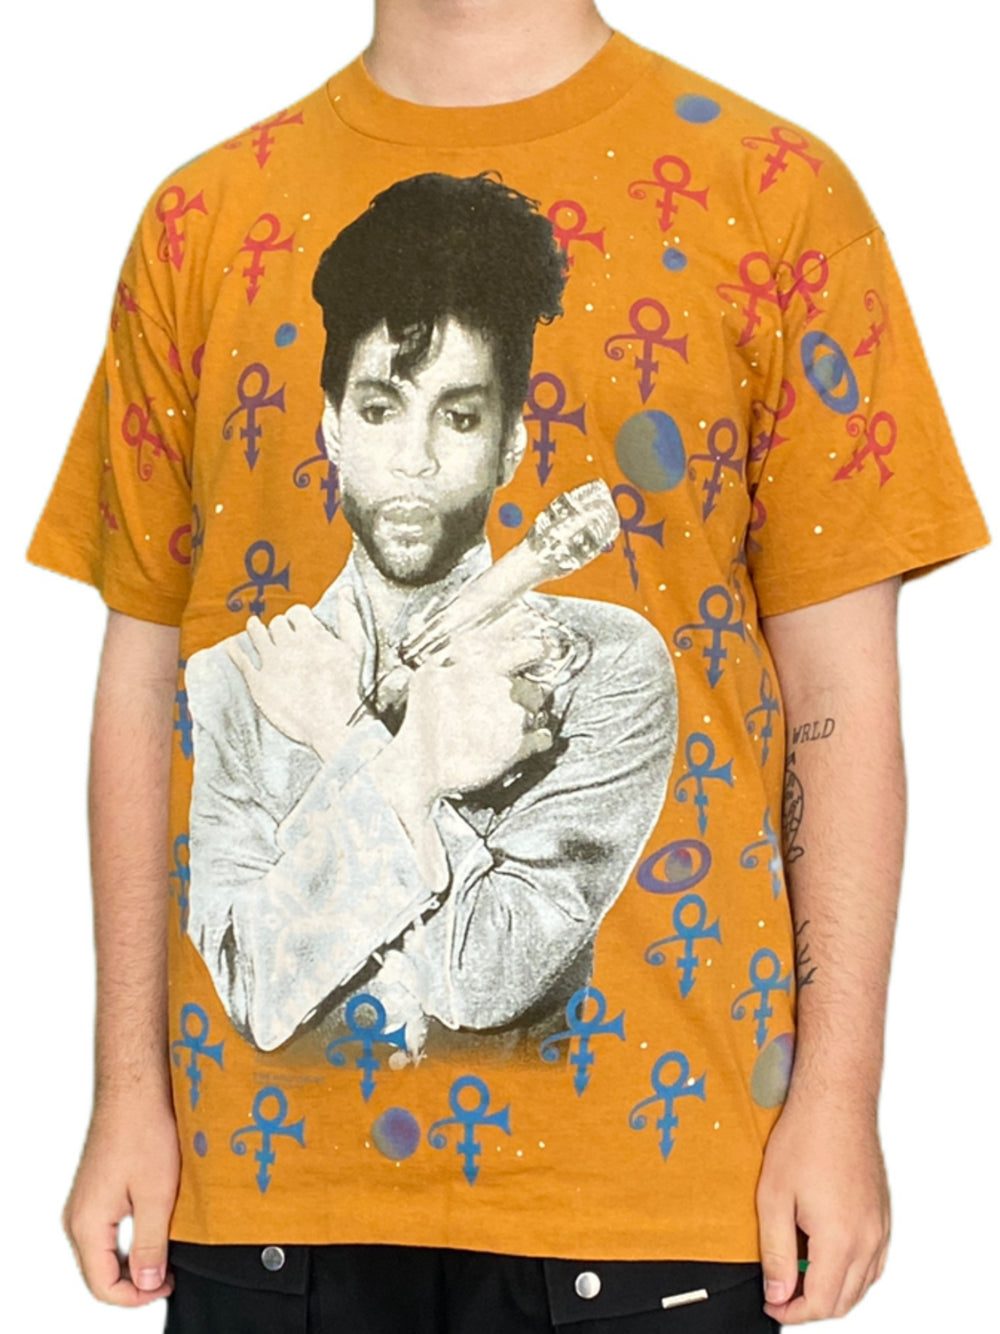 Prince – Official All Over Print Vintage Shirt Love Symbol Pose XLARGE